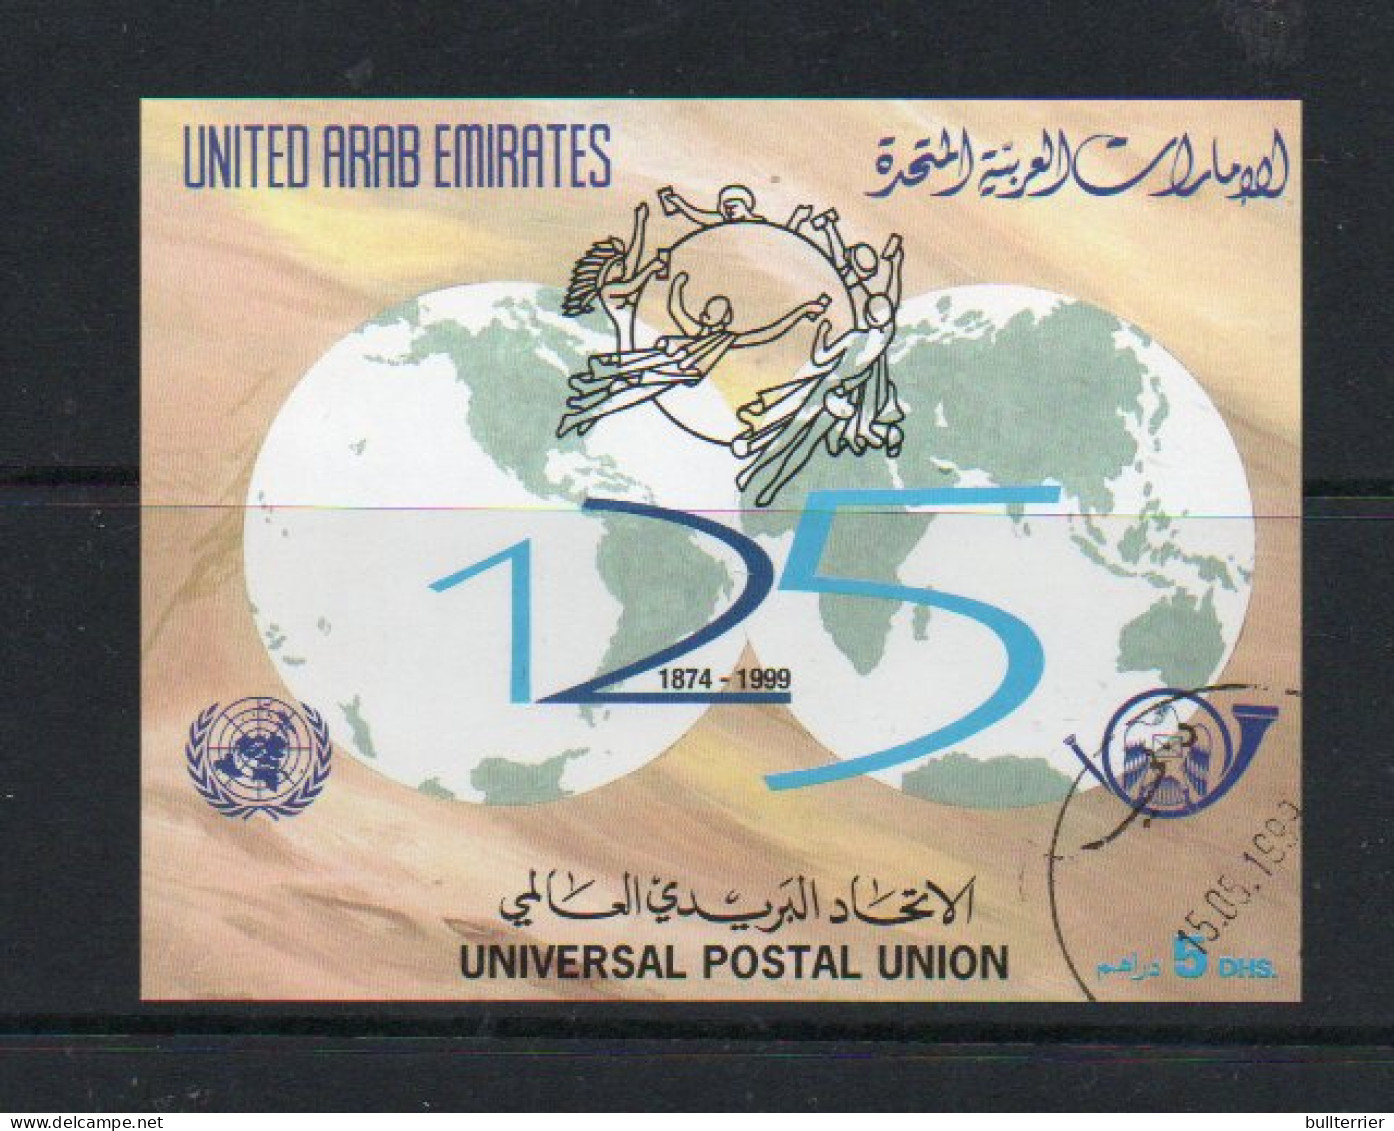 UNITED ARAB EMIRATES - 1999 - UPU SOUVENIR SHEET FINE USED  - Emiratos Árabes Unidos